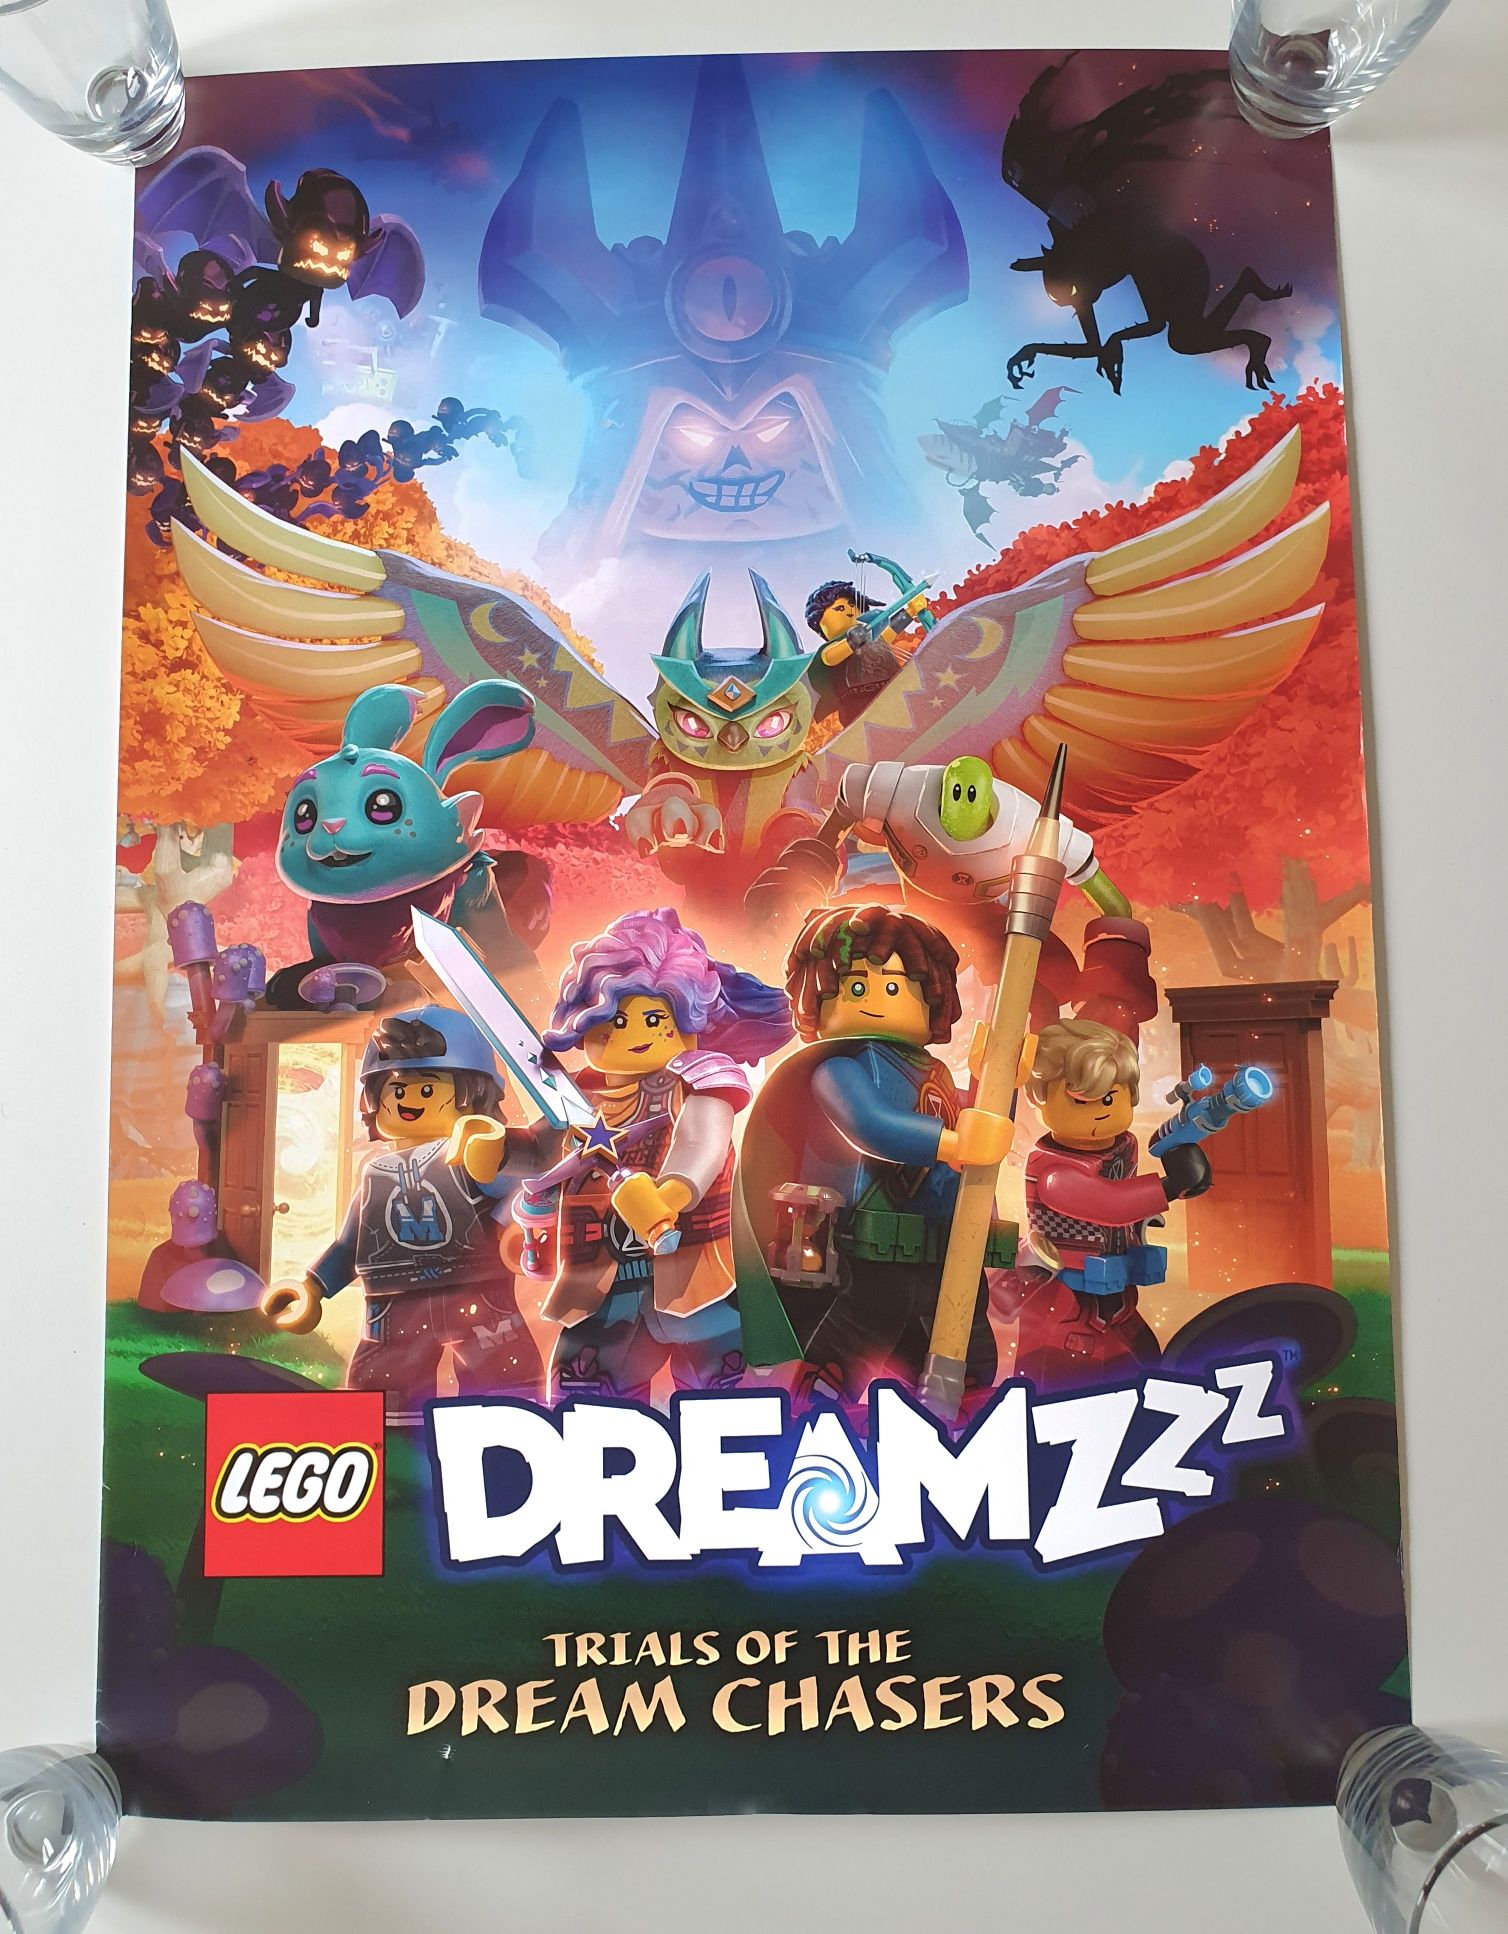 Plakat LEGO dreamzzz